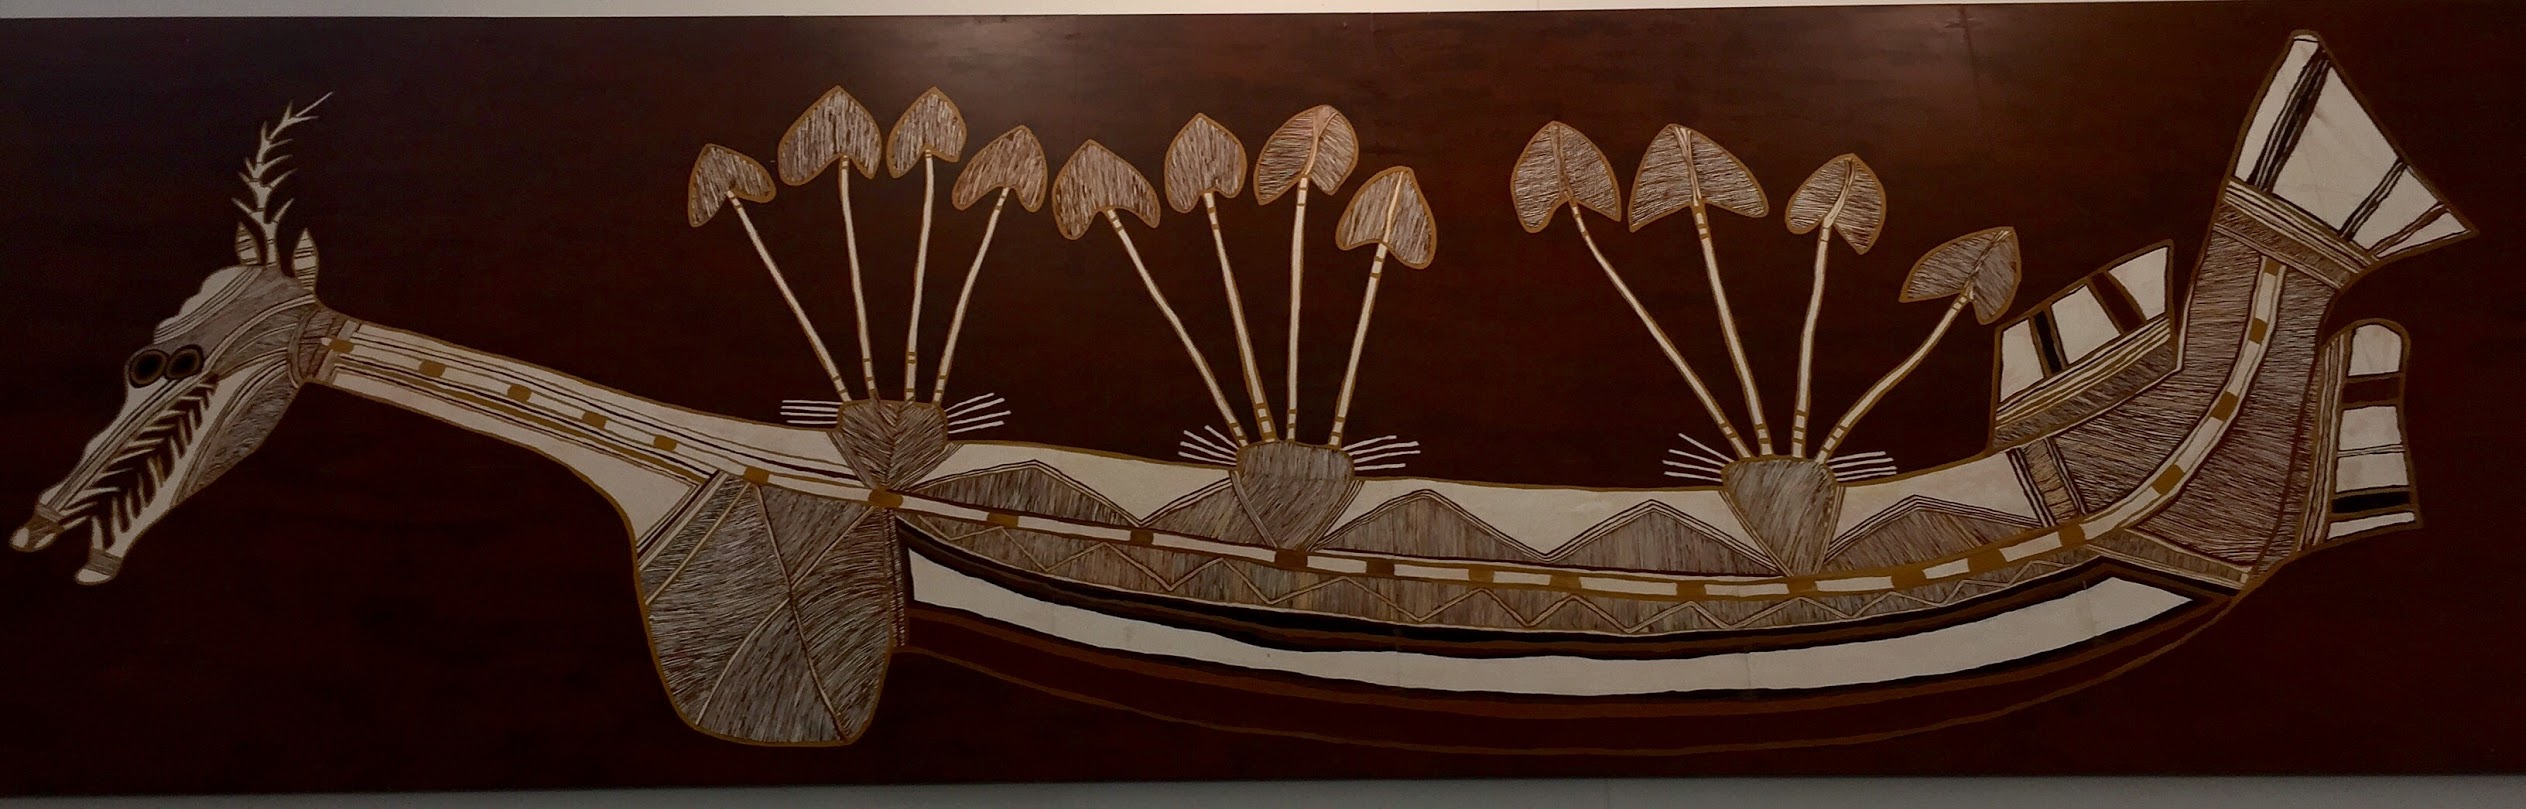 Australia aboriginal art work